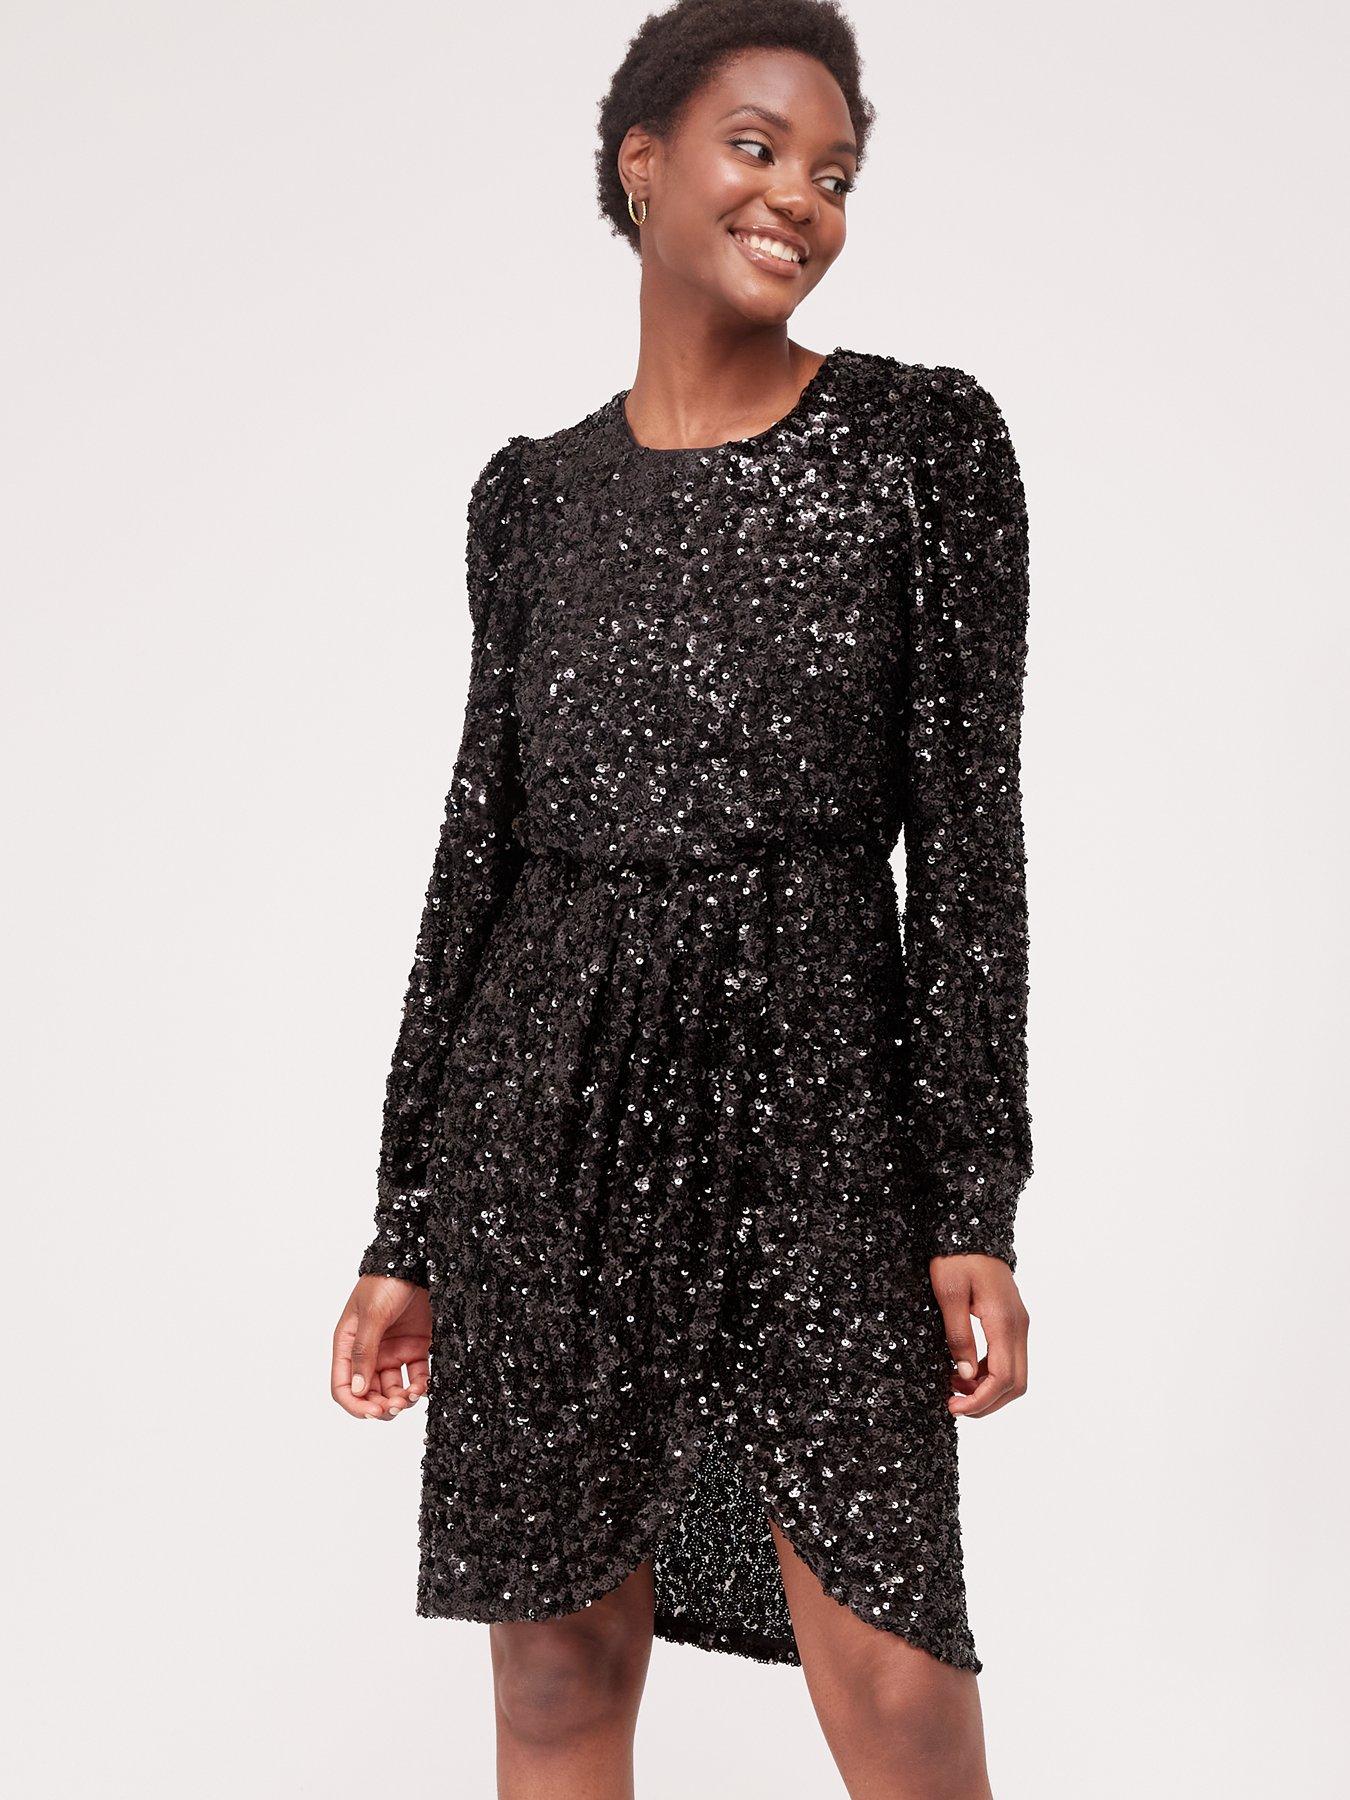 black sparkly dress